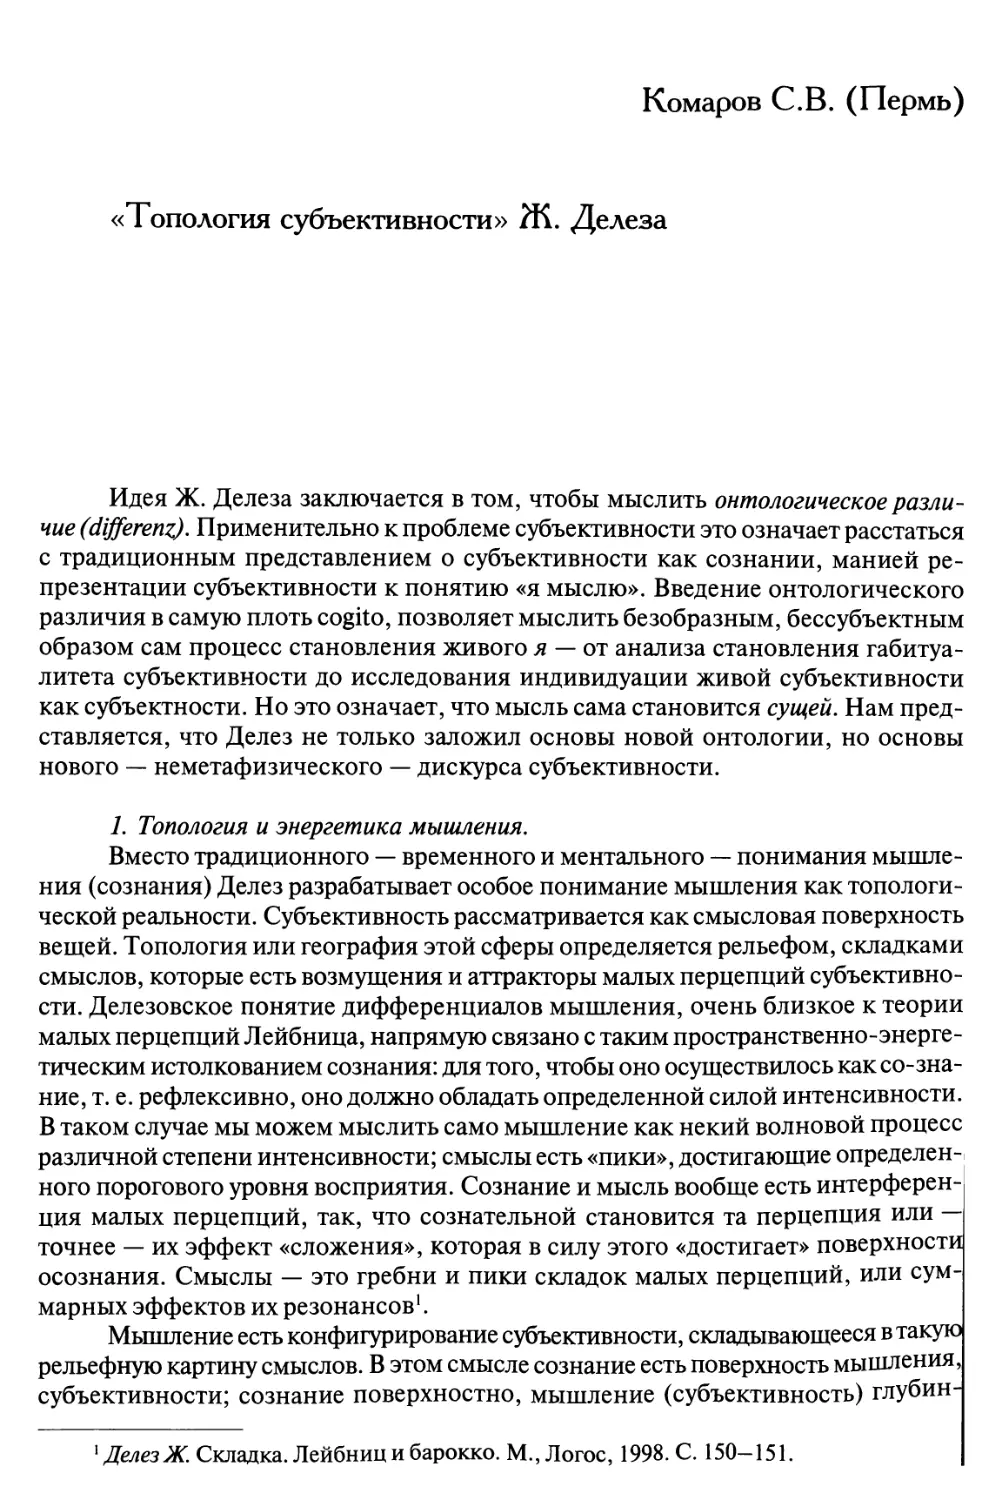 Комаров C.B. «Топология субъективности» Ж. Делеза